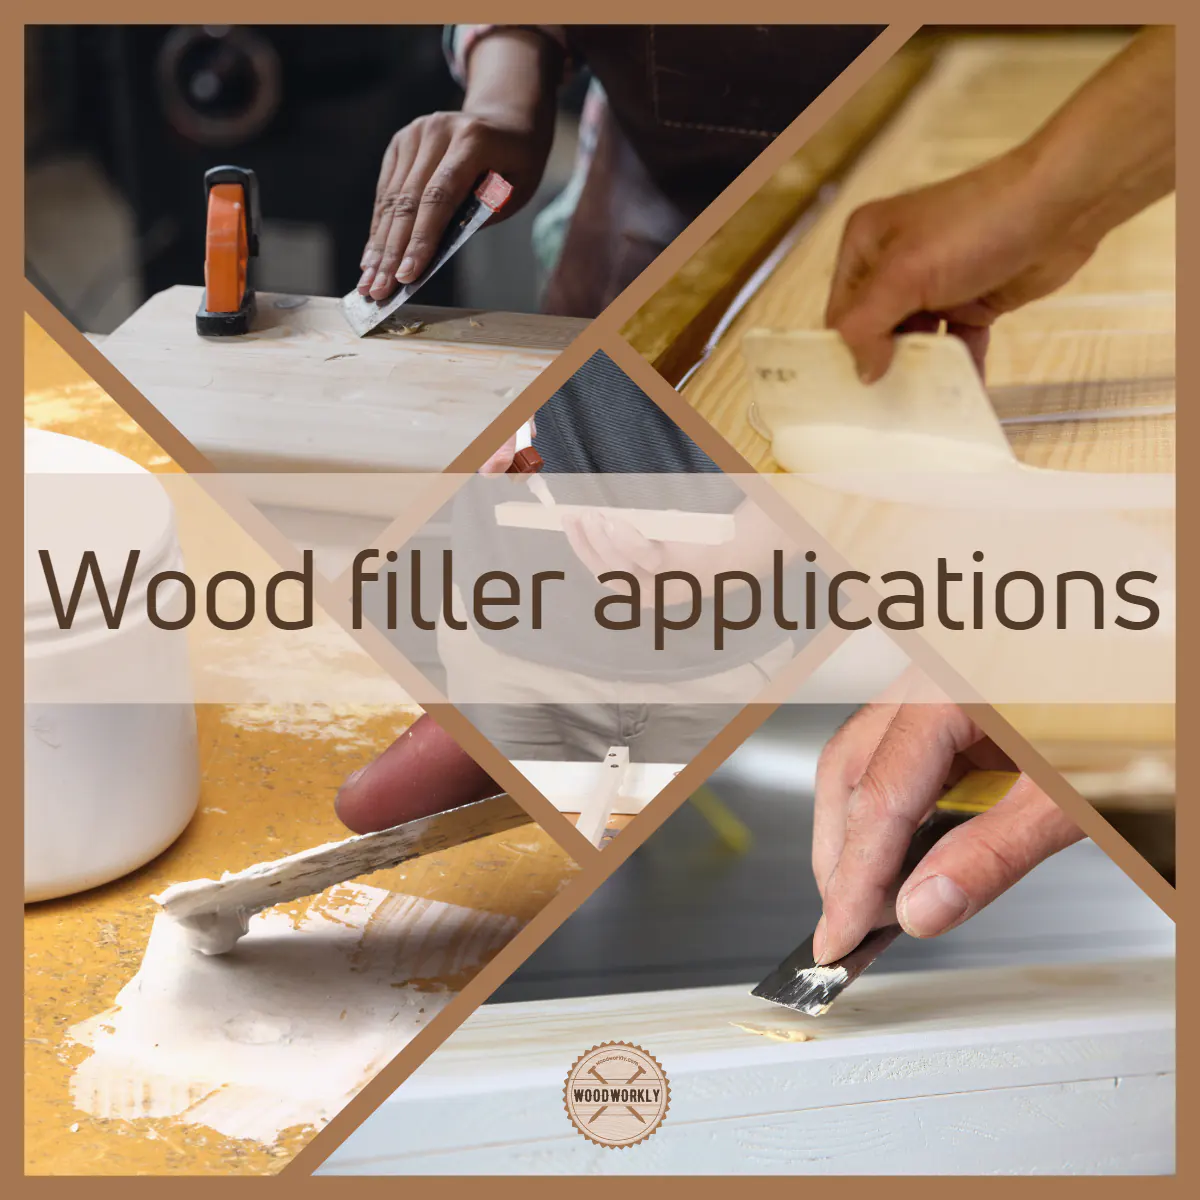 Wood filler applications